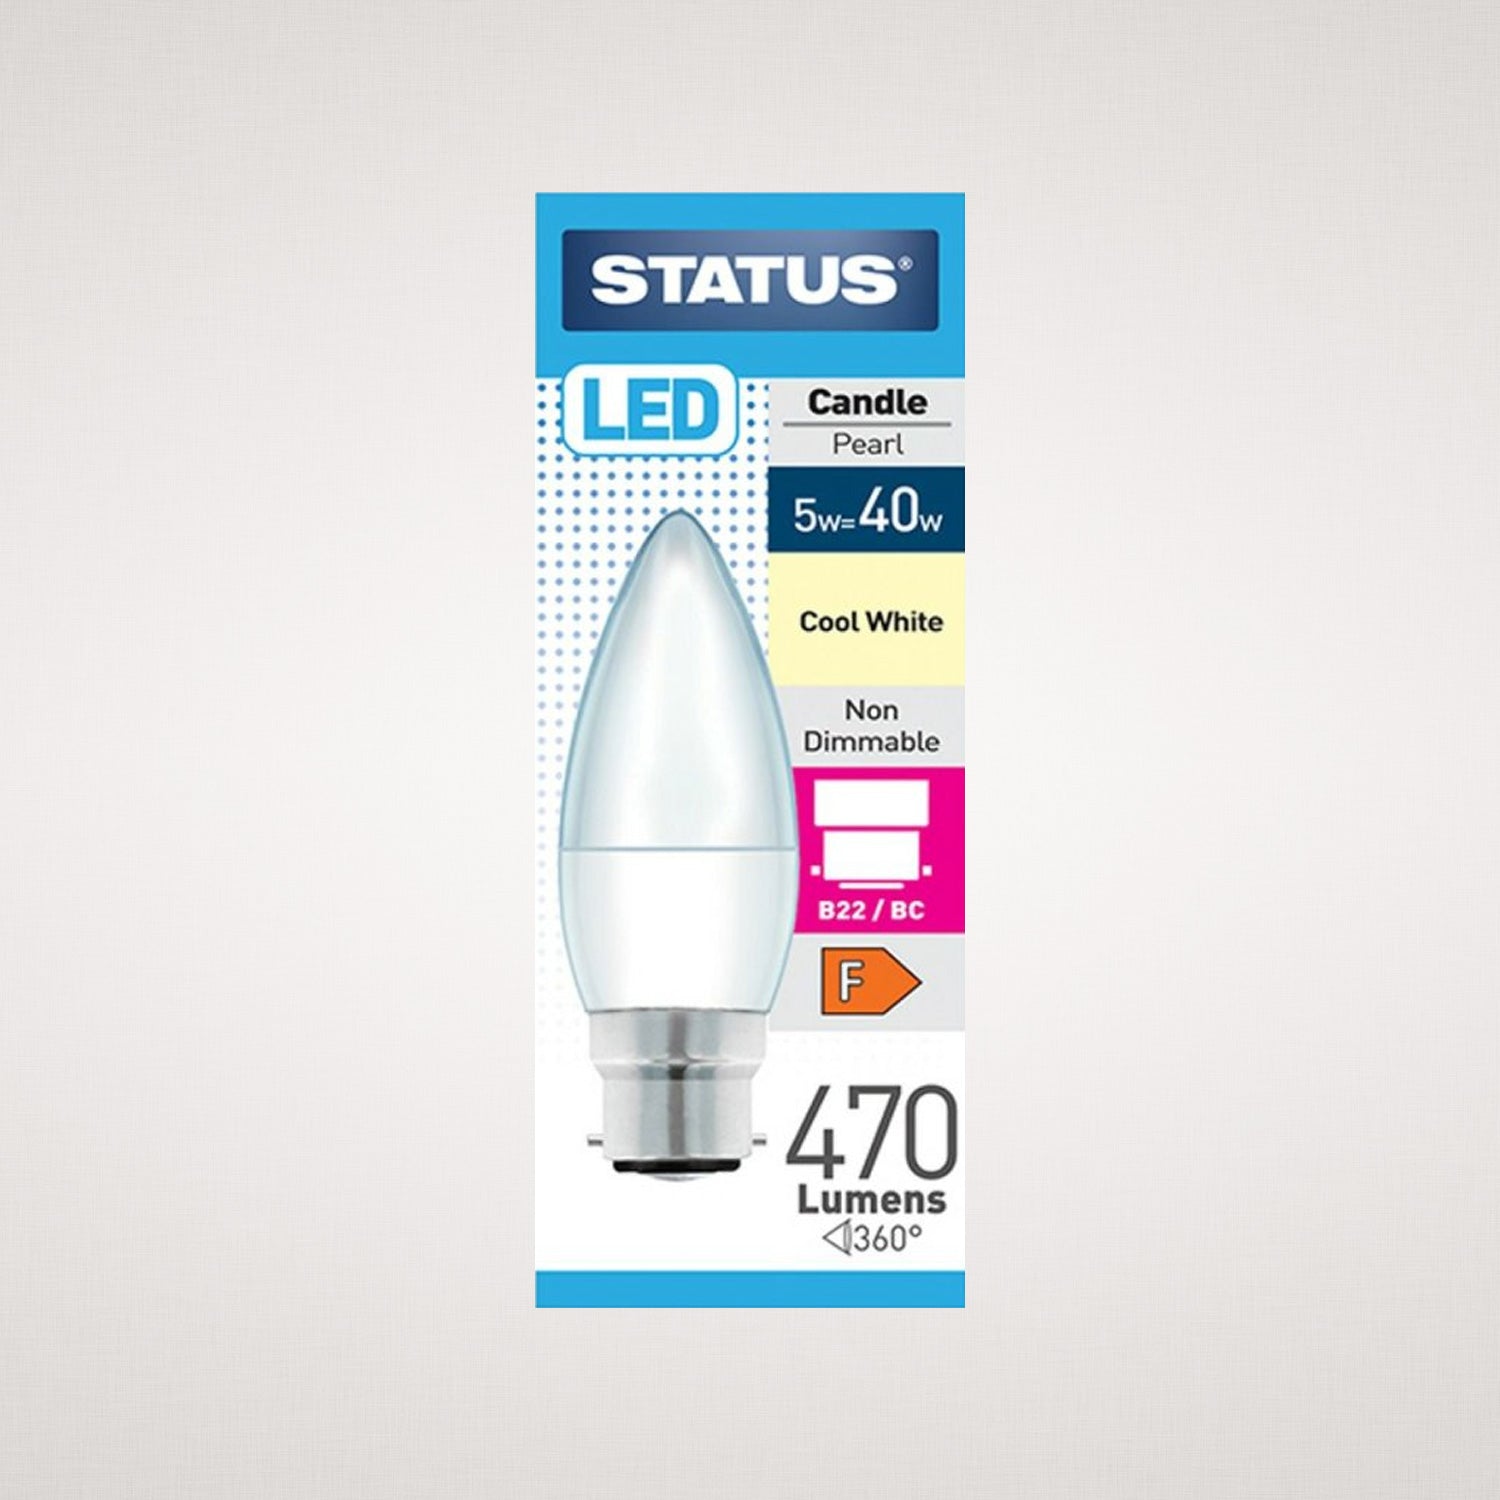 Status LED Candle Pearl BC/B22 5w=40w Bulb - Cool White